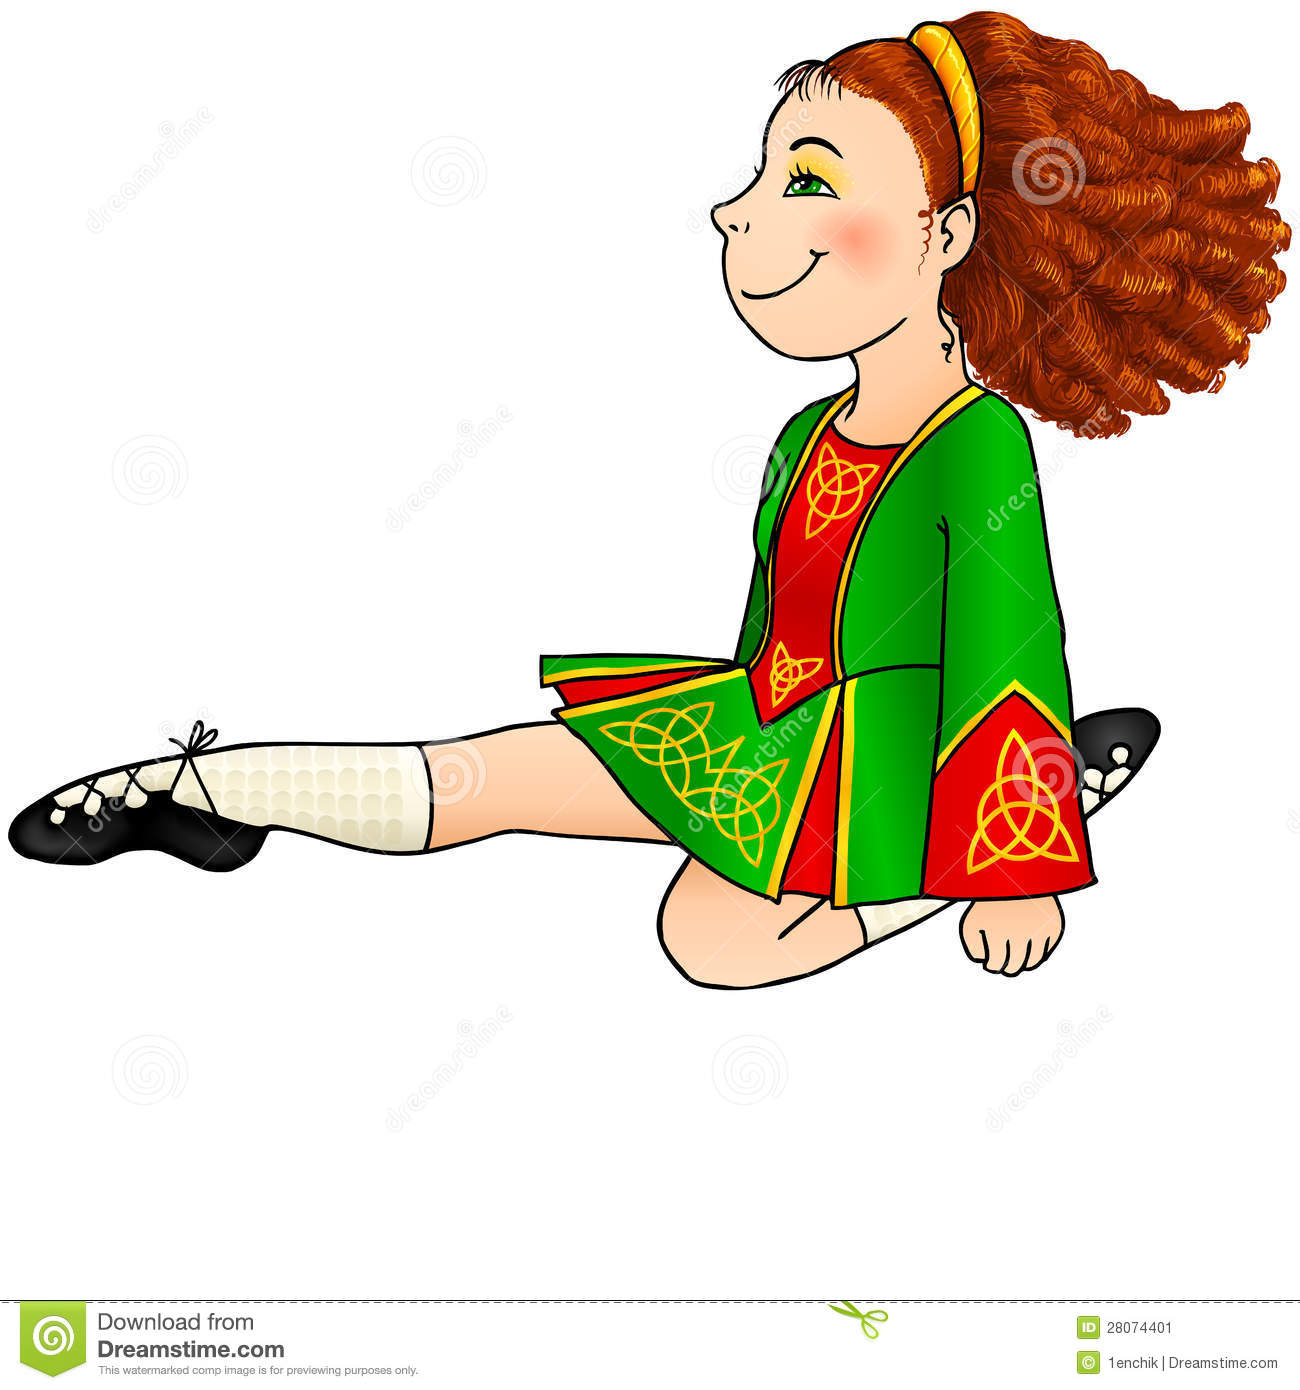 Irish Dancing Girl In Traditional Dress Stock Image   Image  28074401